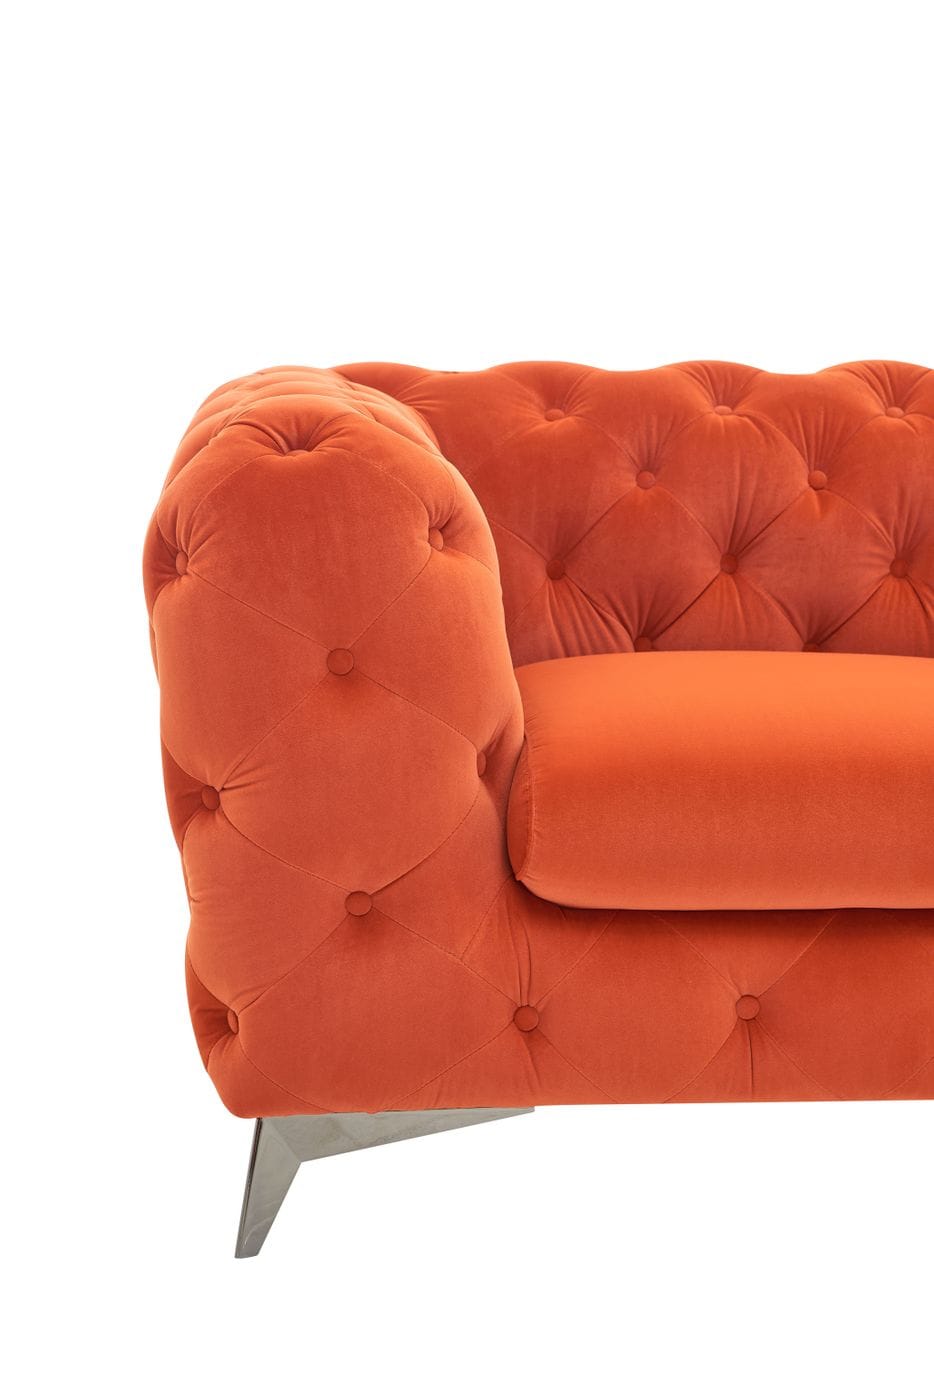 VIG Furniture Divani Casa Delilah Orange Fabric Loveseat